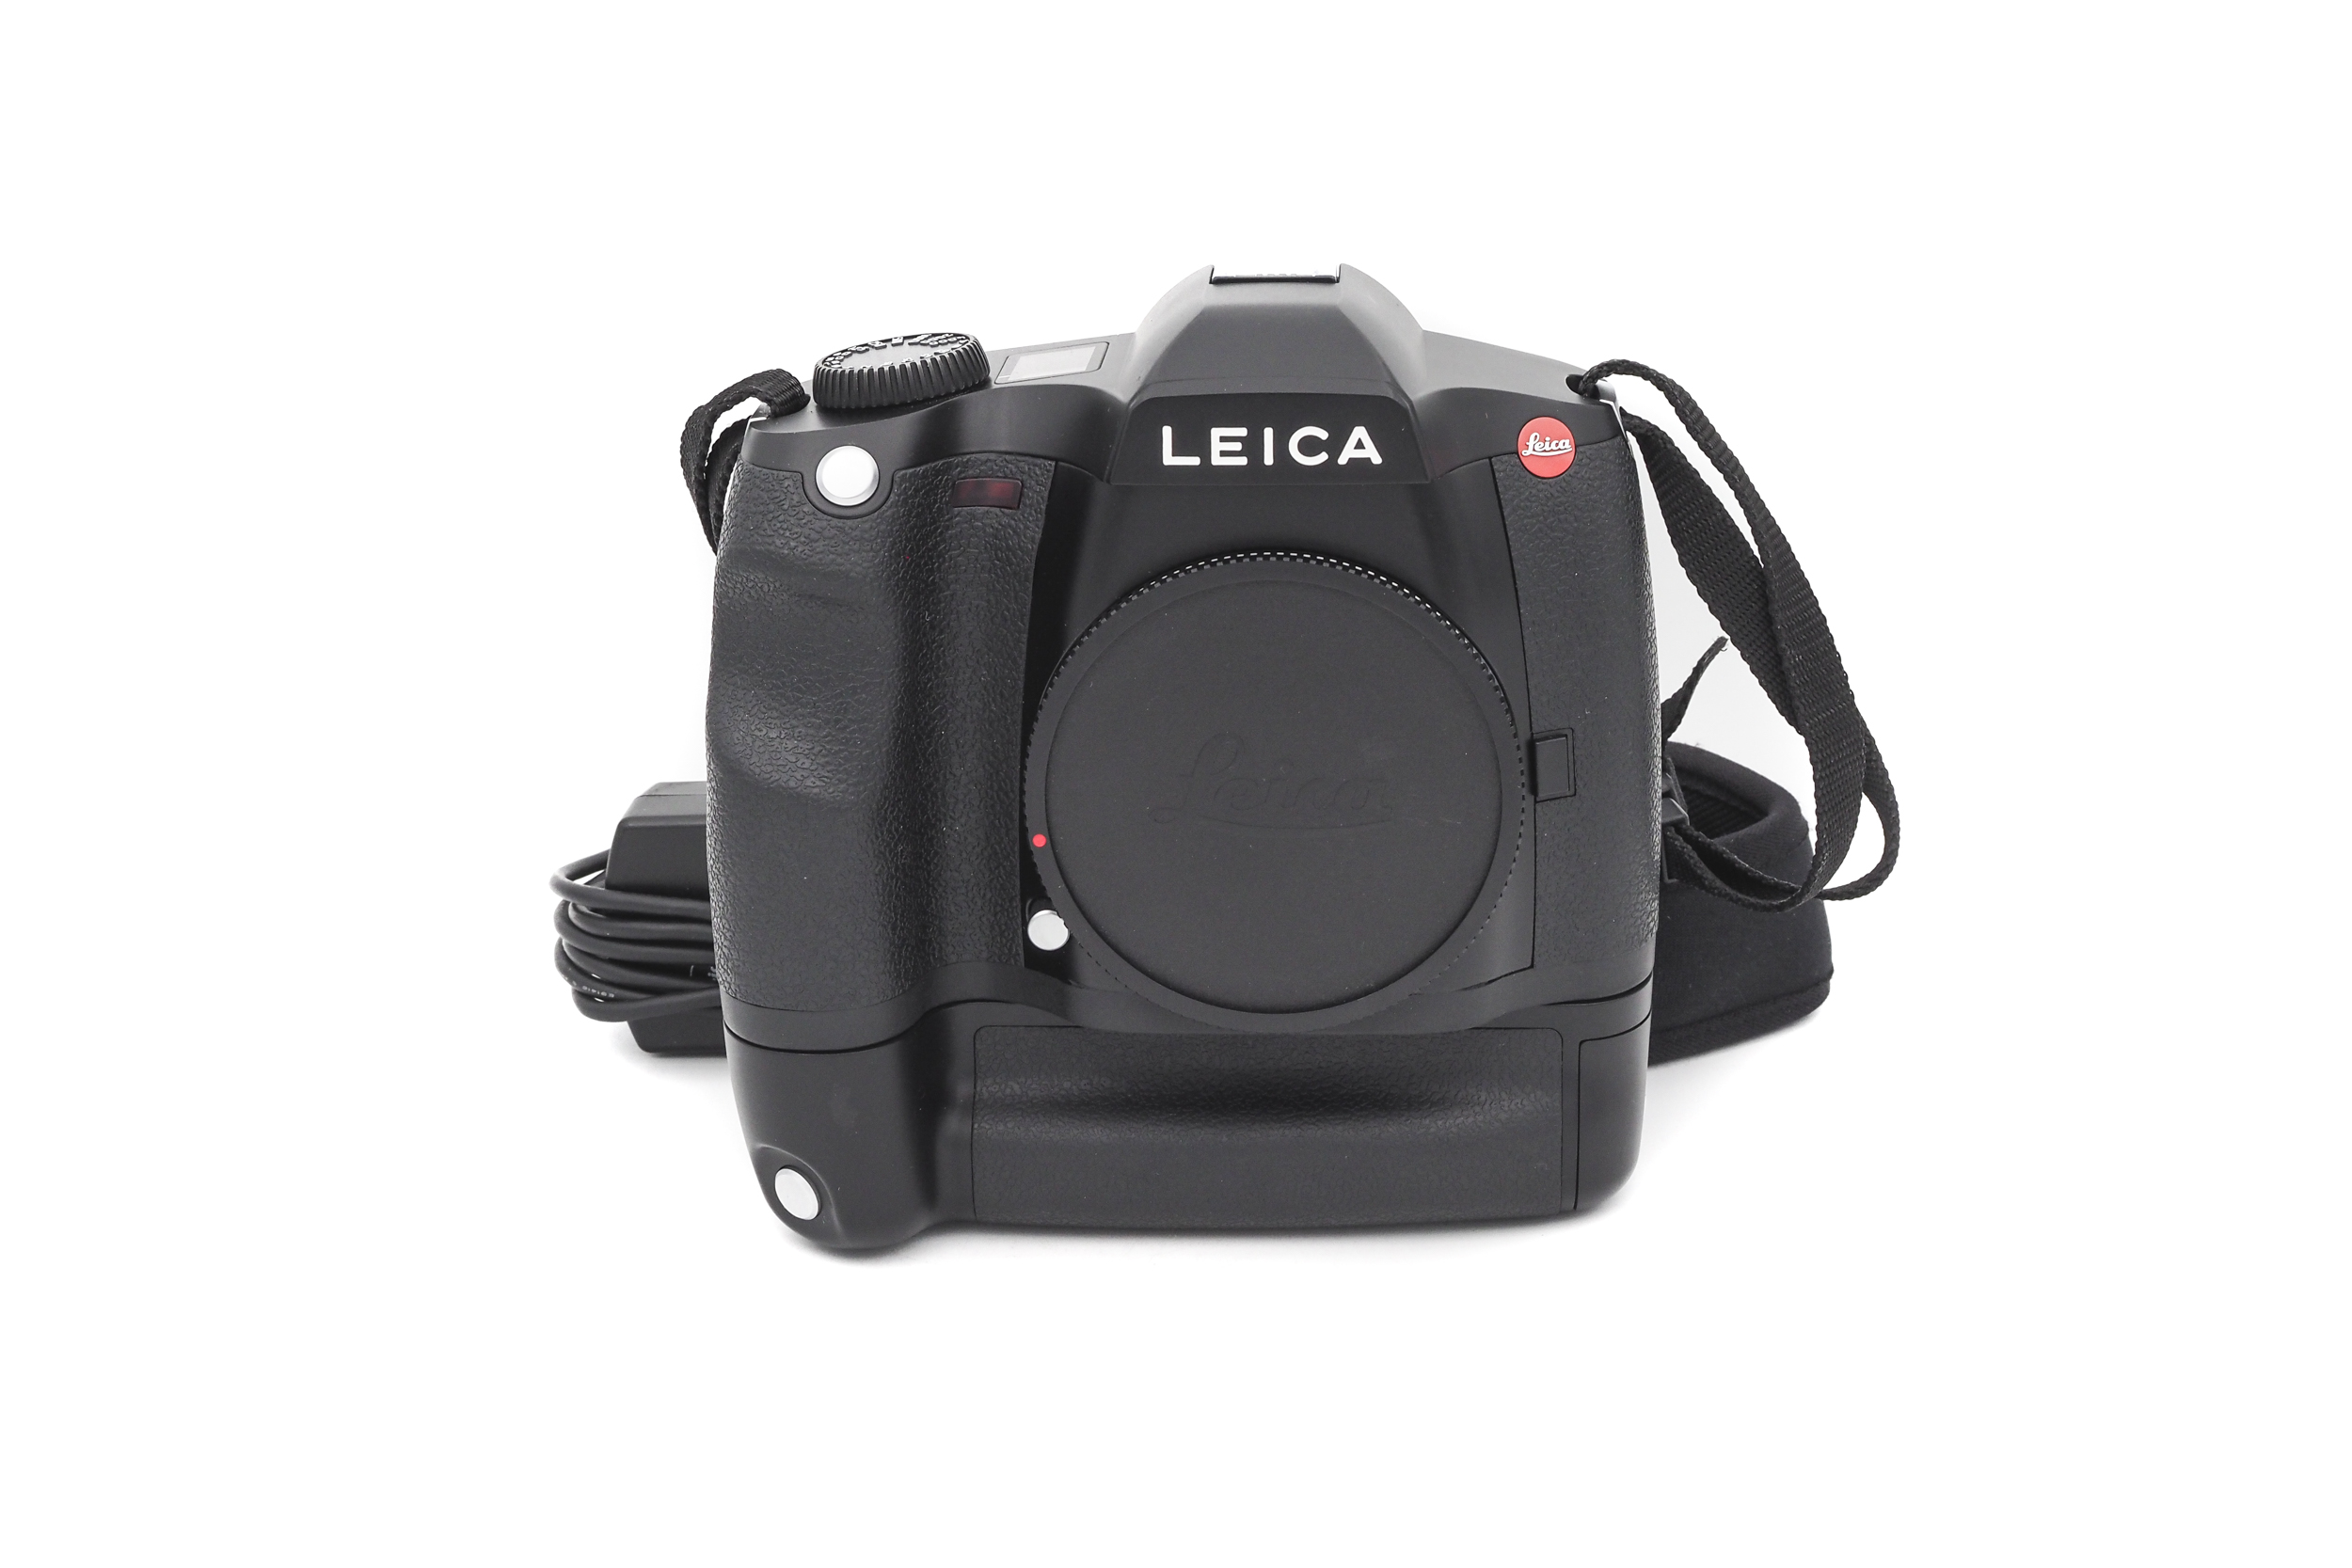 Leica S2 inkl. Multifunction Handgrip S